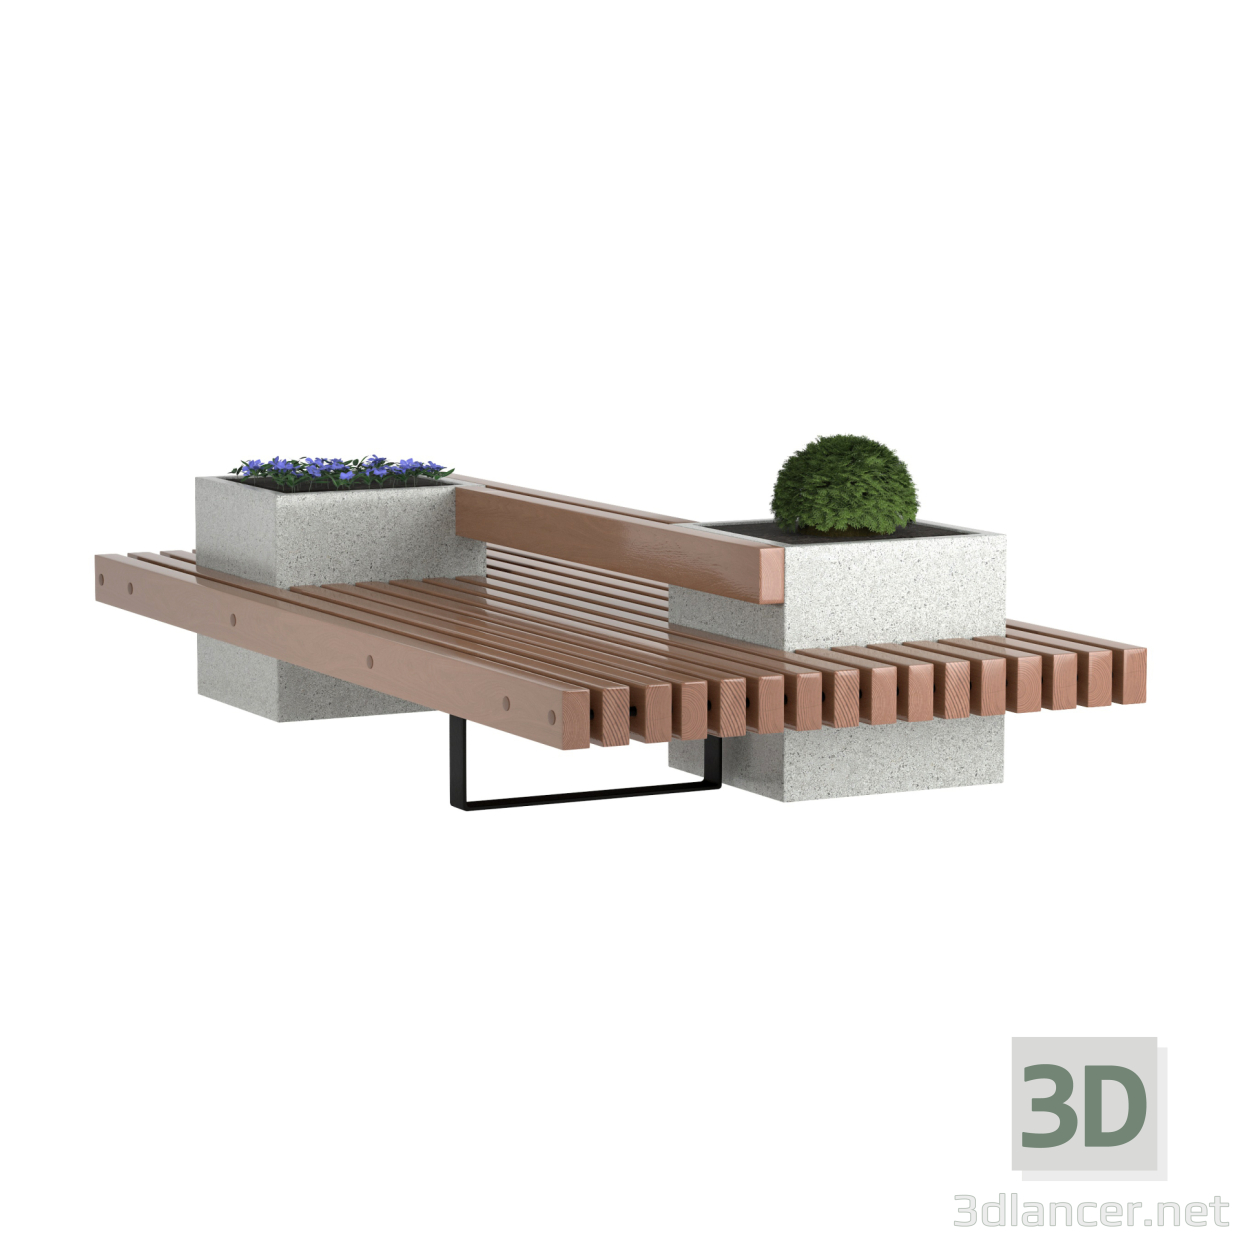 3d Vases and bench model buy - render